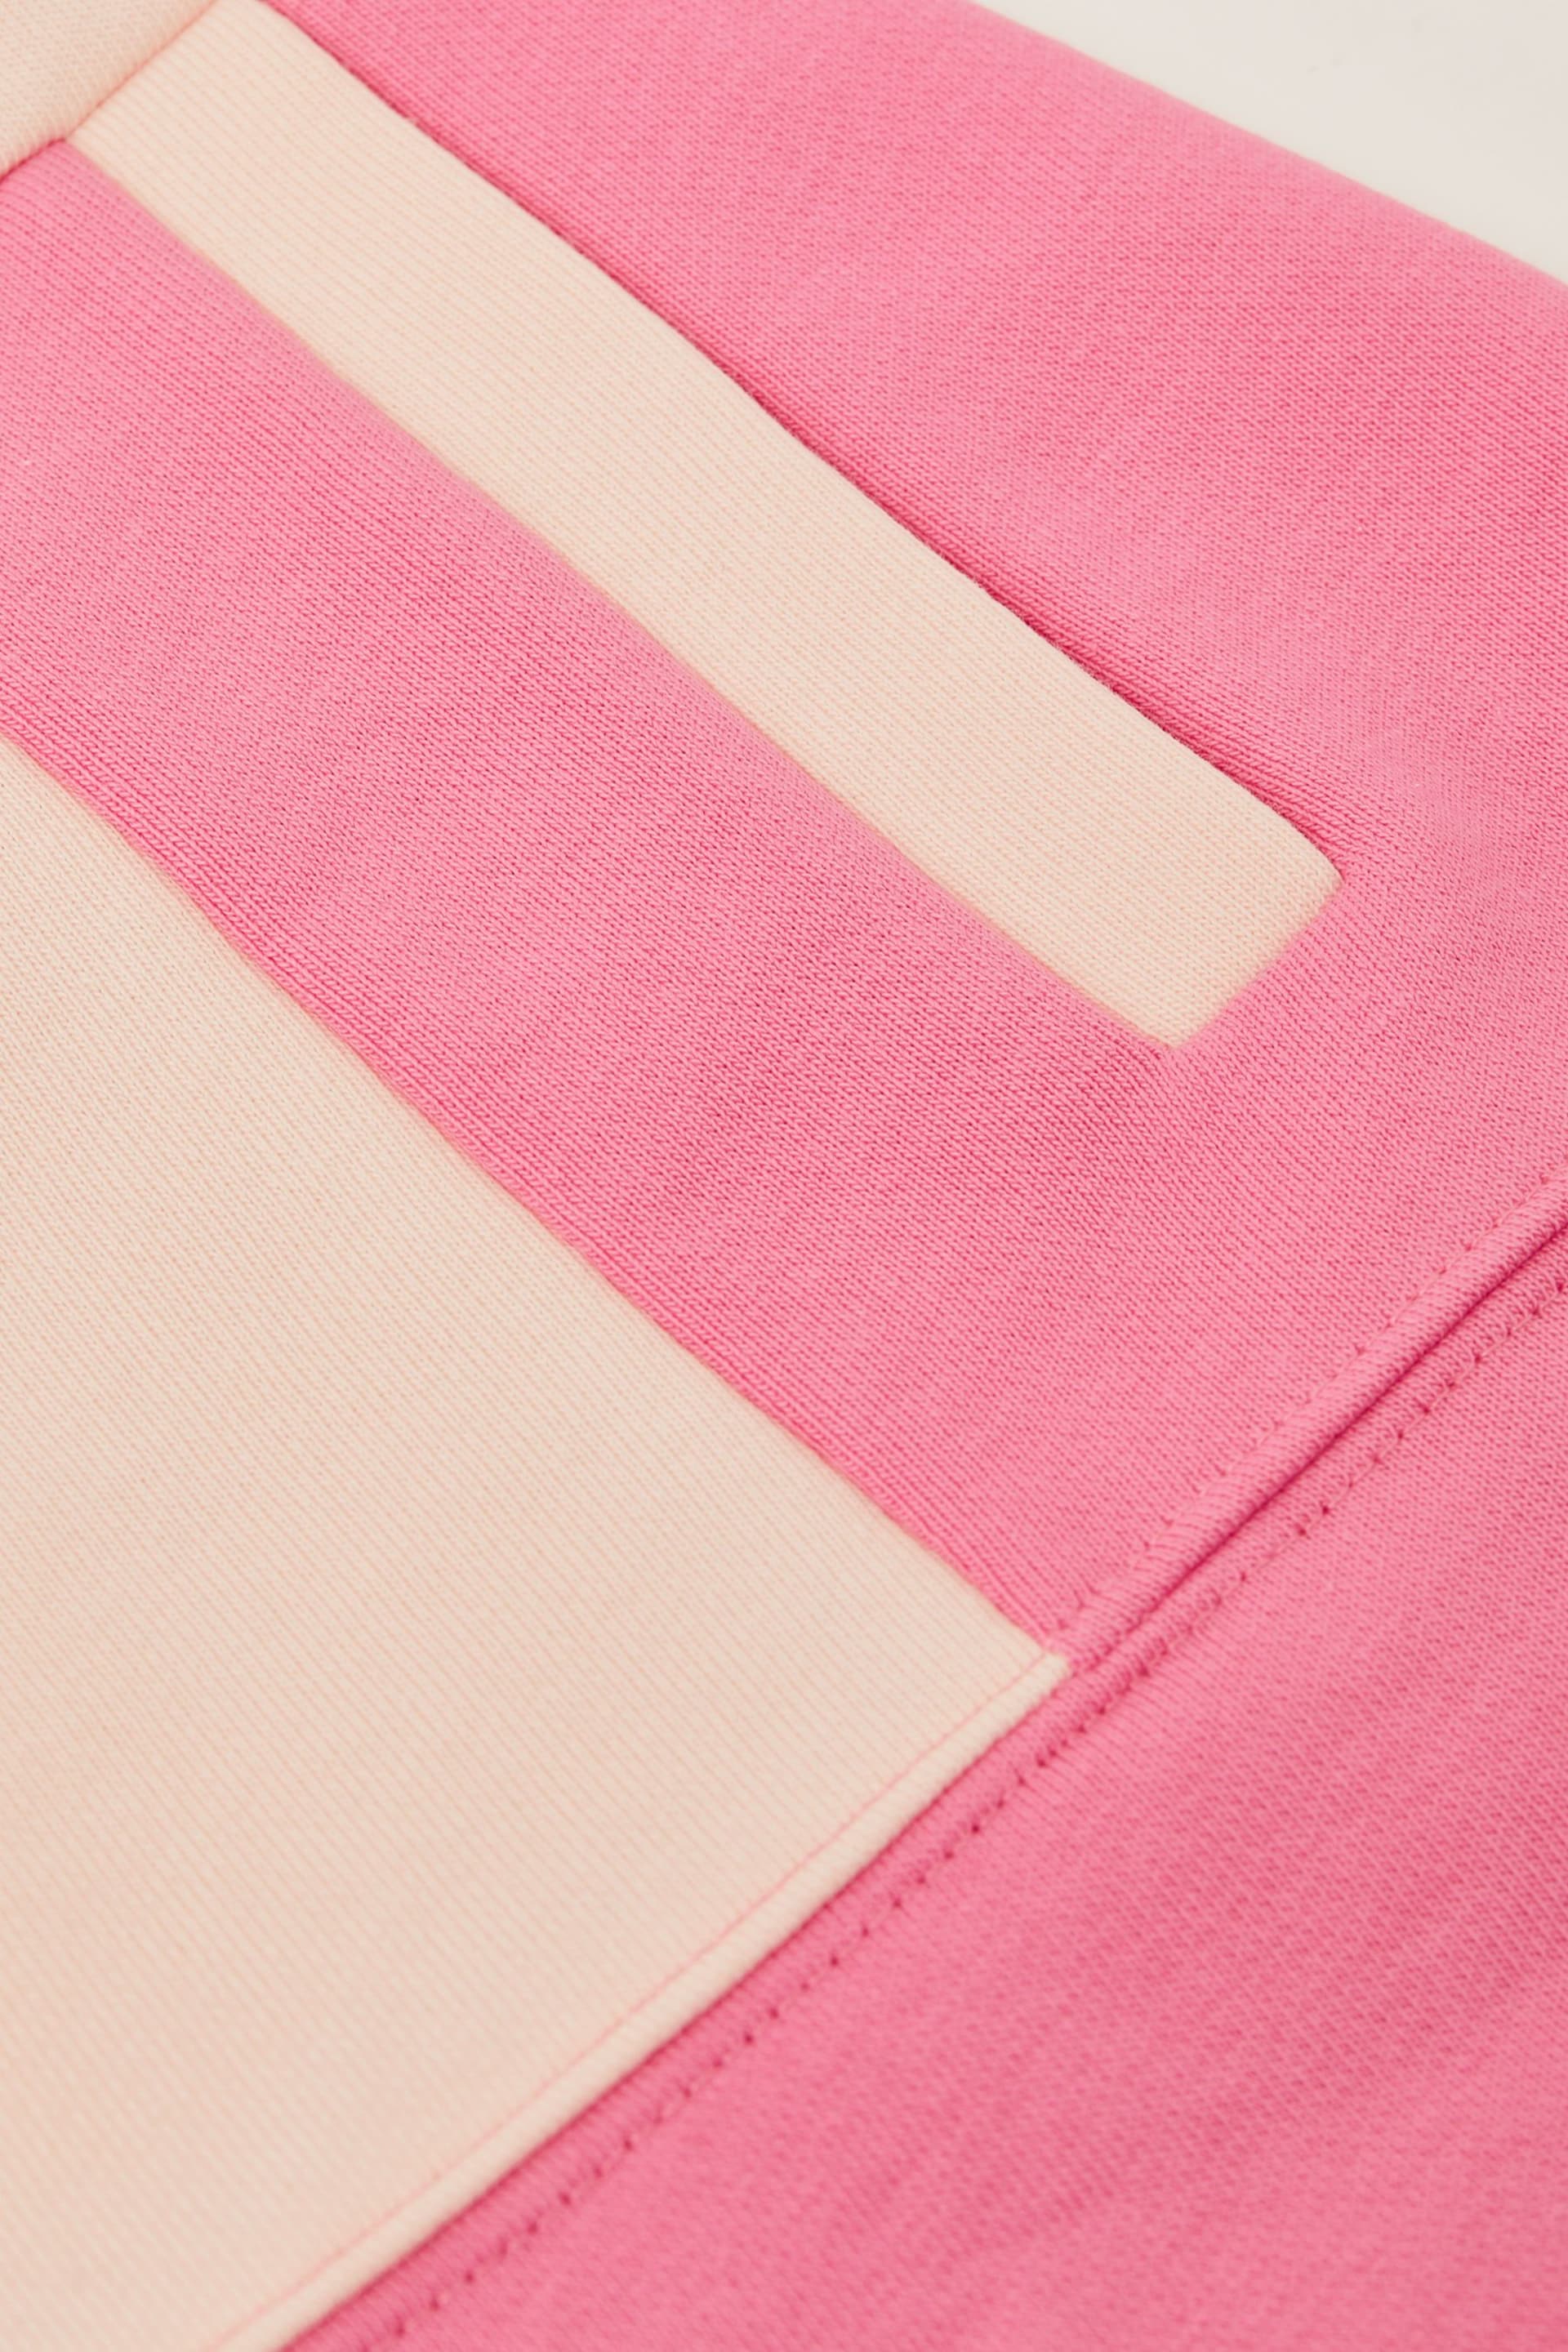 Reiss Pink Macey Junior Colourblock Cotton Drawstring Skirt - Image 6 of 6